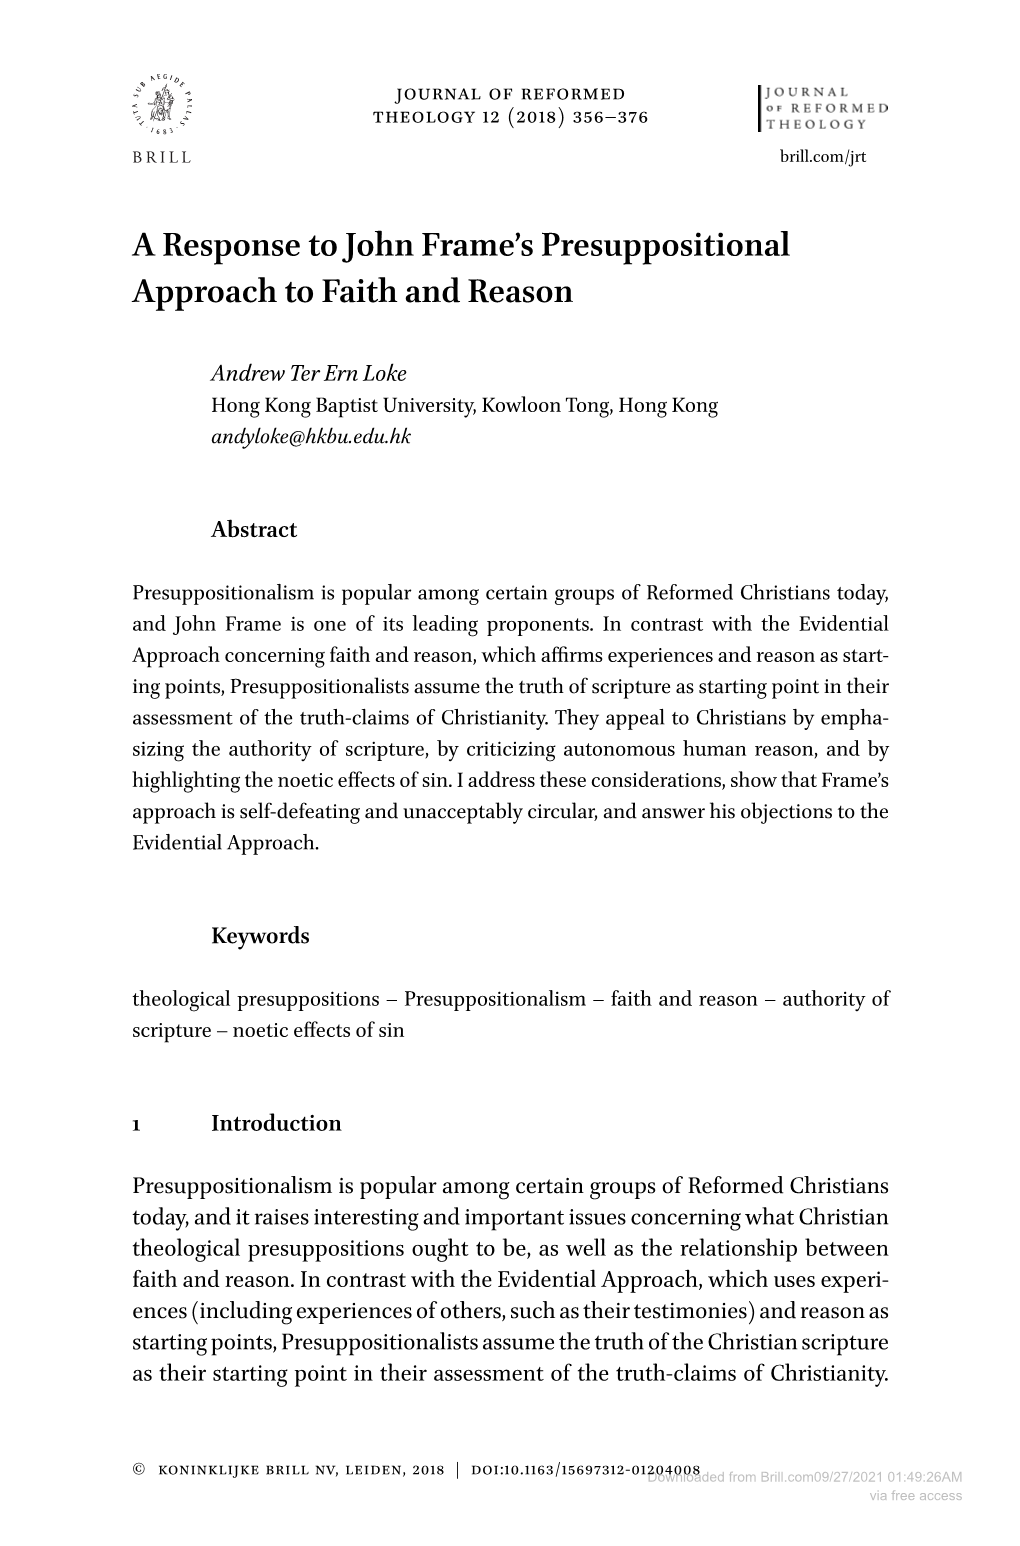 A Response to John Frame's Presuppositional Approach to Faith